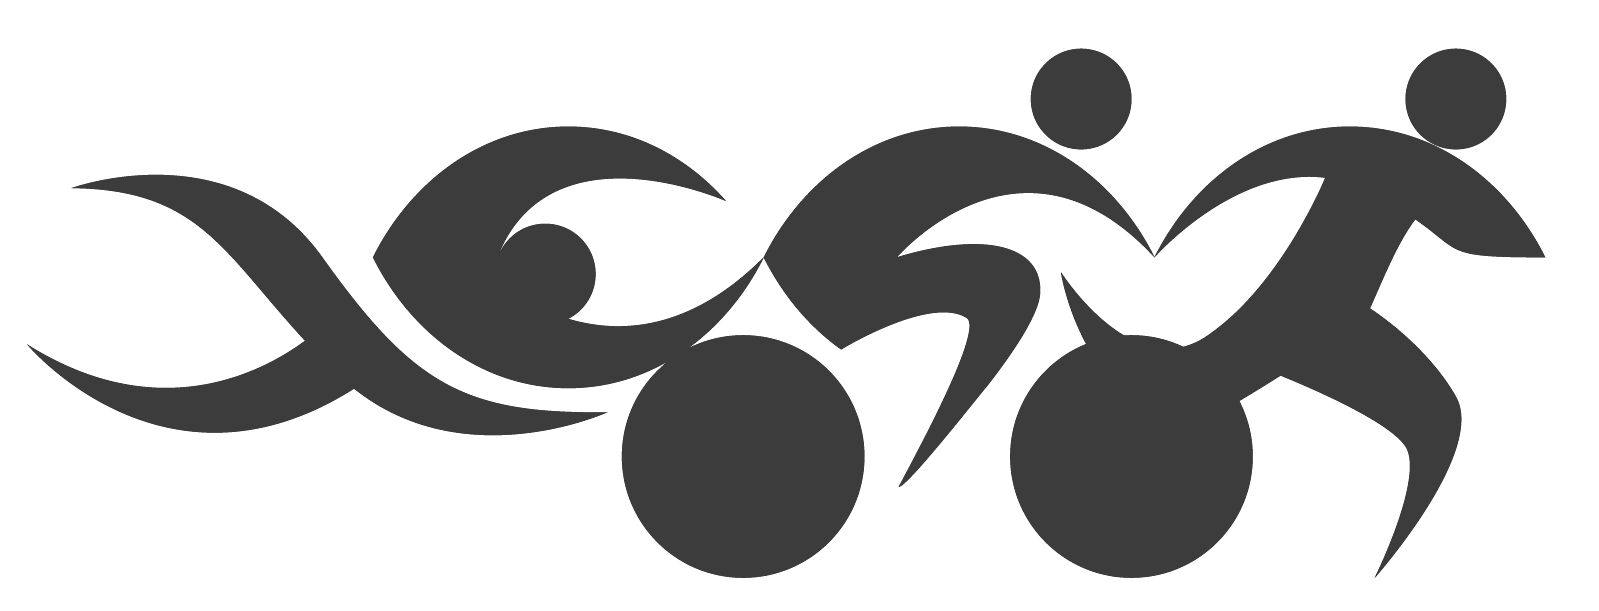 Triathlete Logo - Home LeHardy, Triathlete